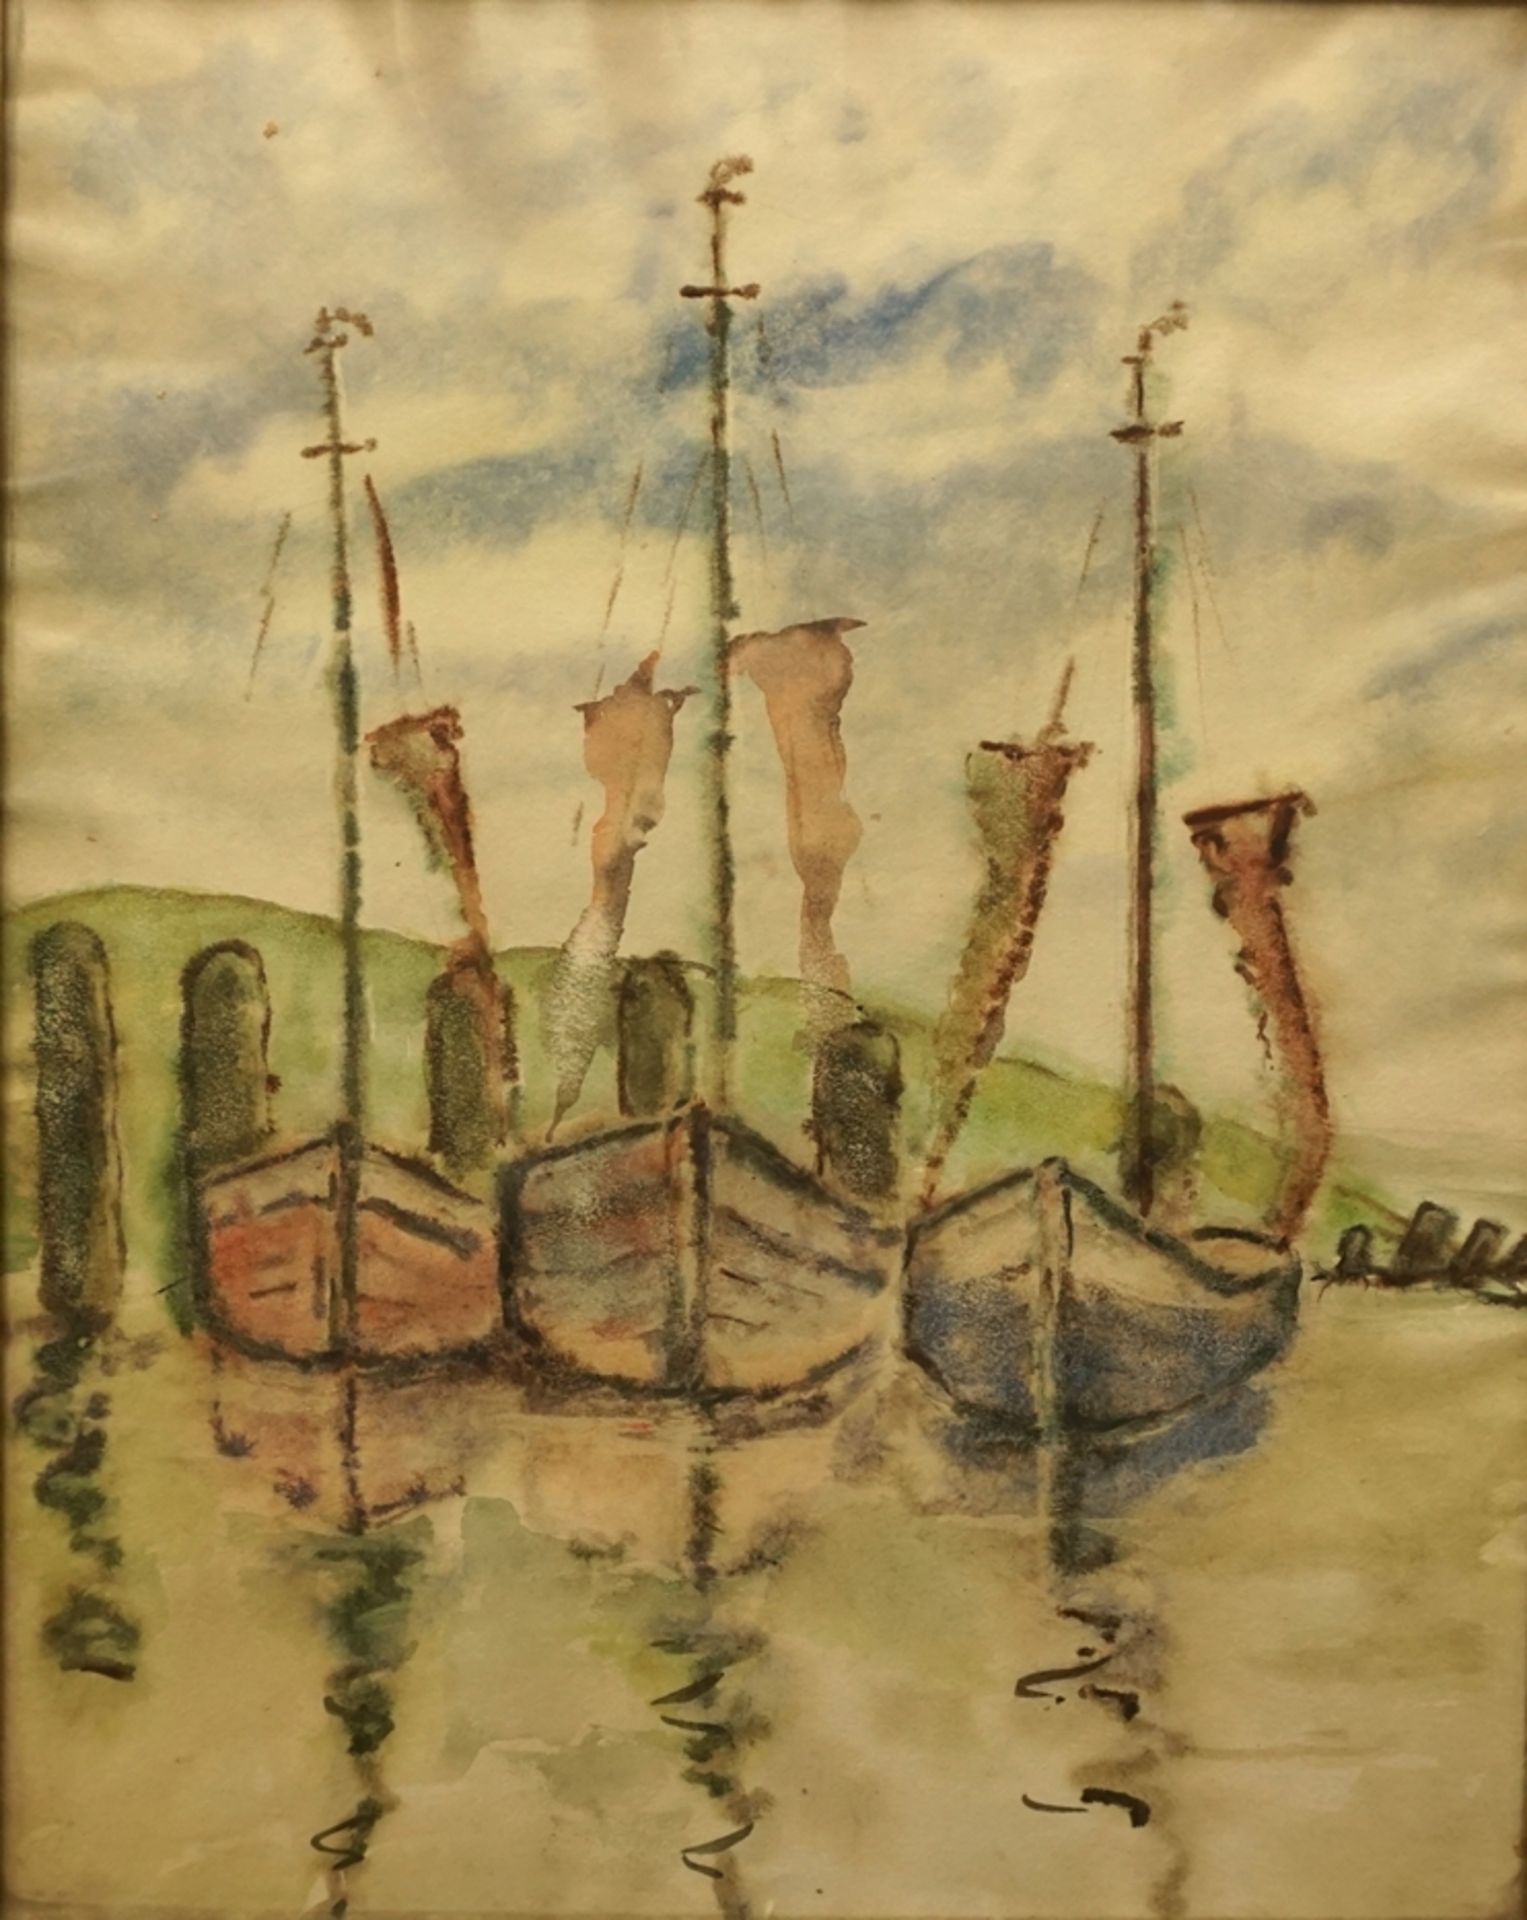 anonymer Künstler, "Anliegende Segelboote", frühes 20. Jh., Aquarell